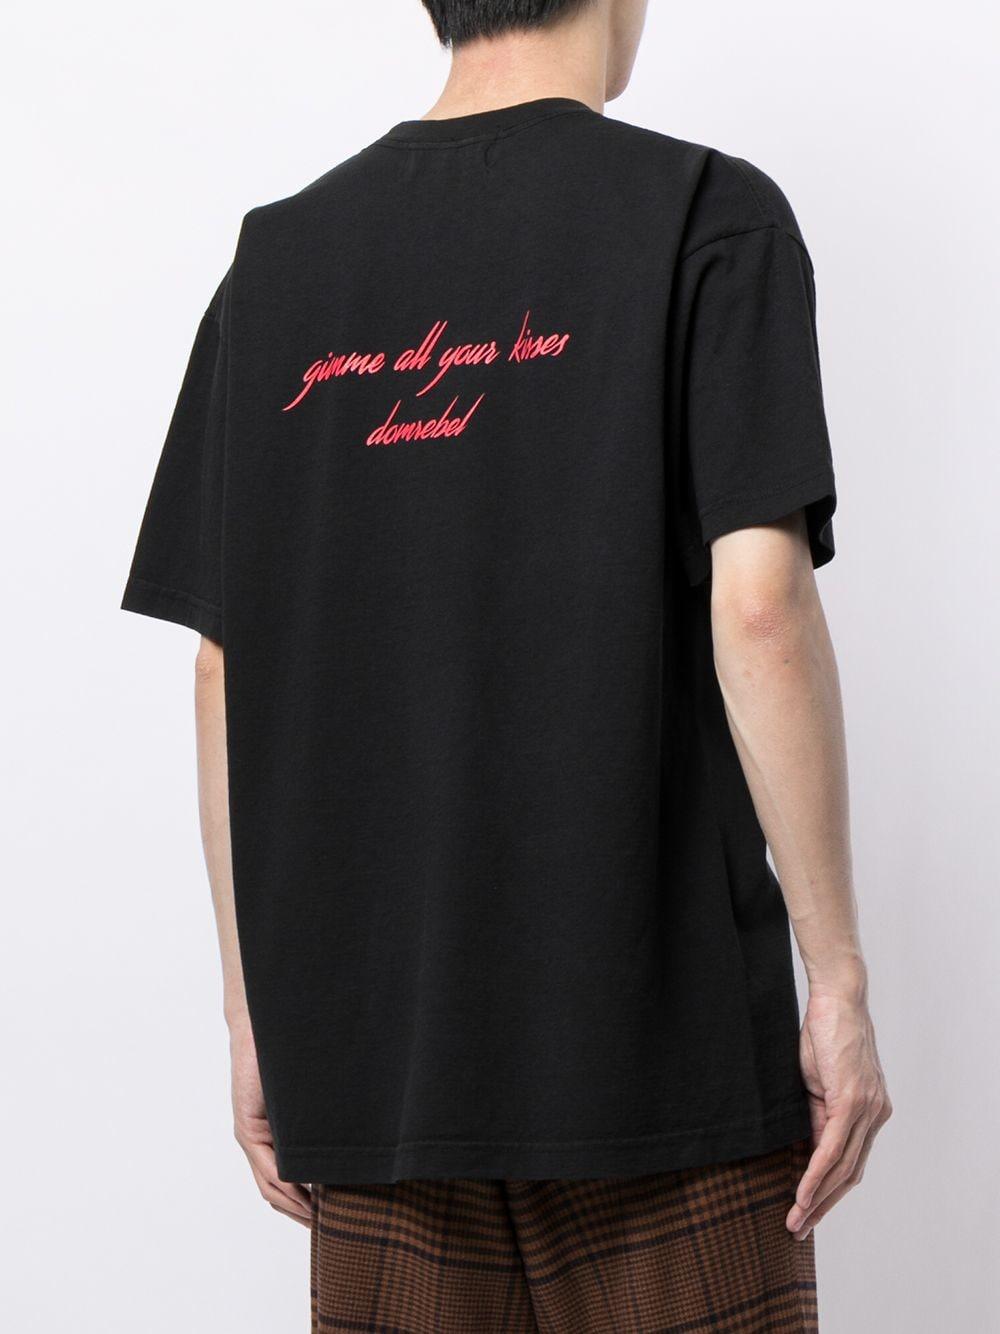 DOMREBEL Cotton Teddy Bear-print T-shirt in Black for Men - Lyst